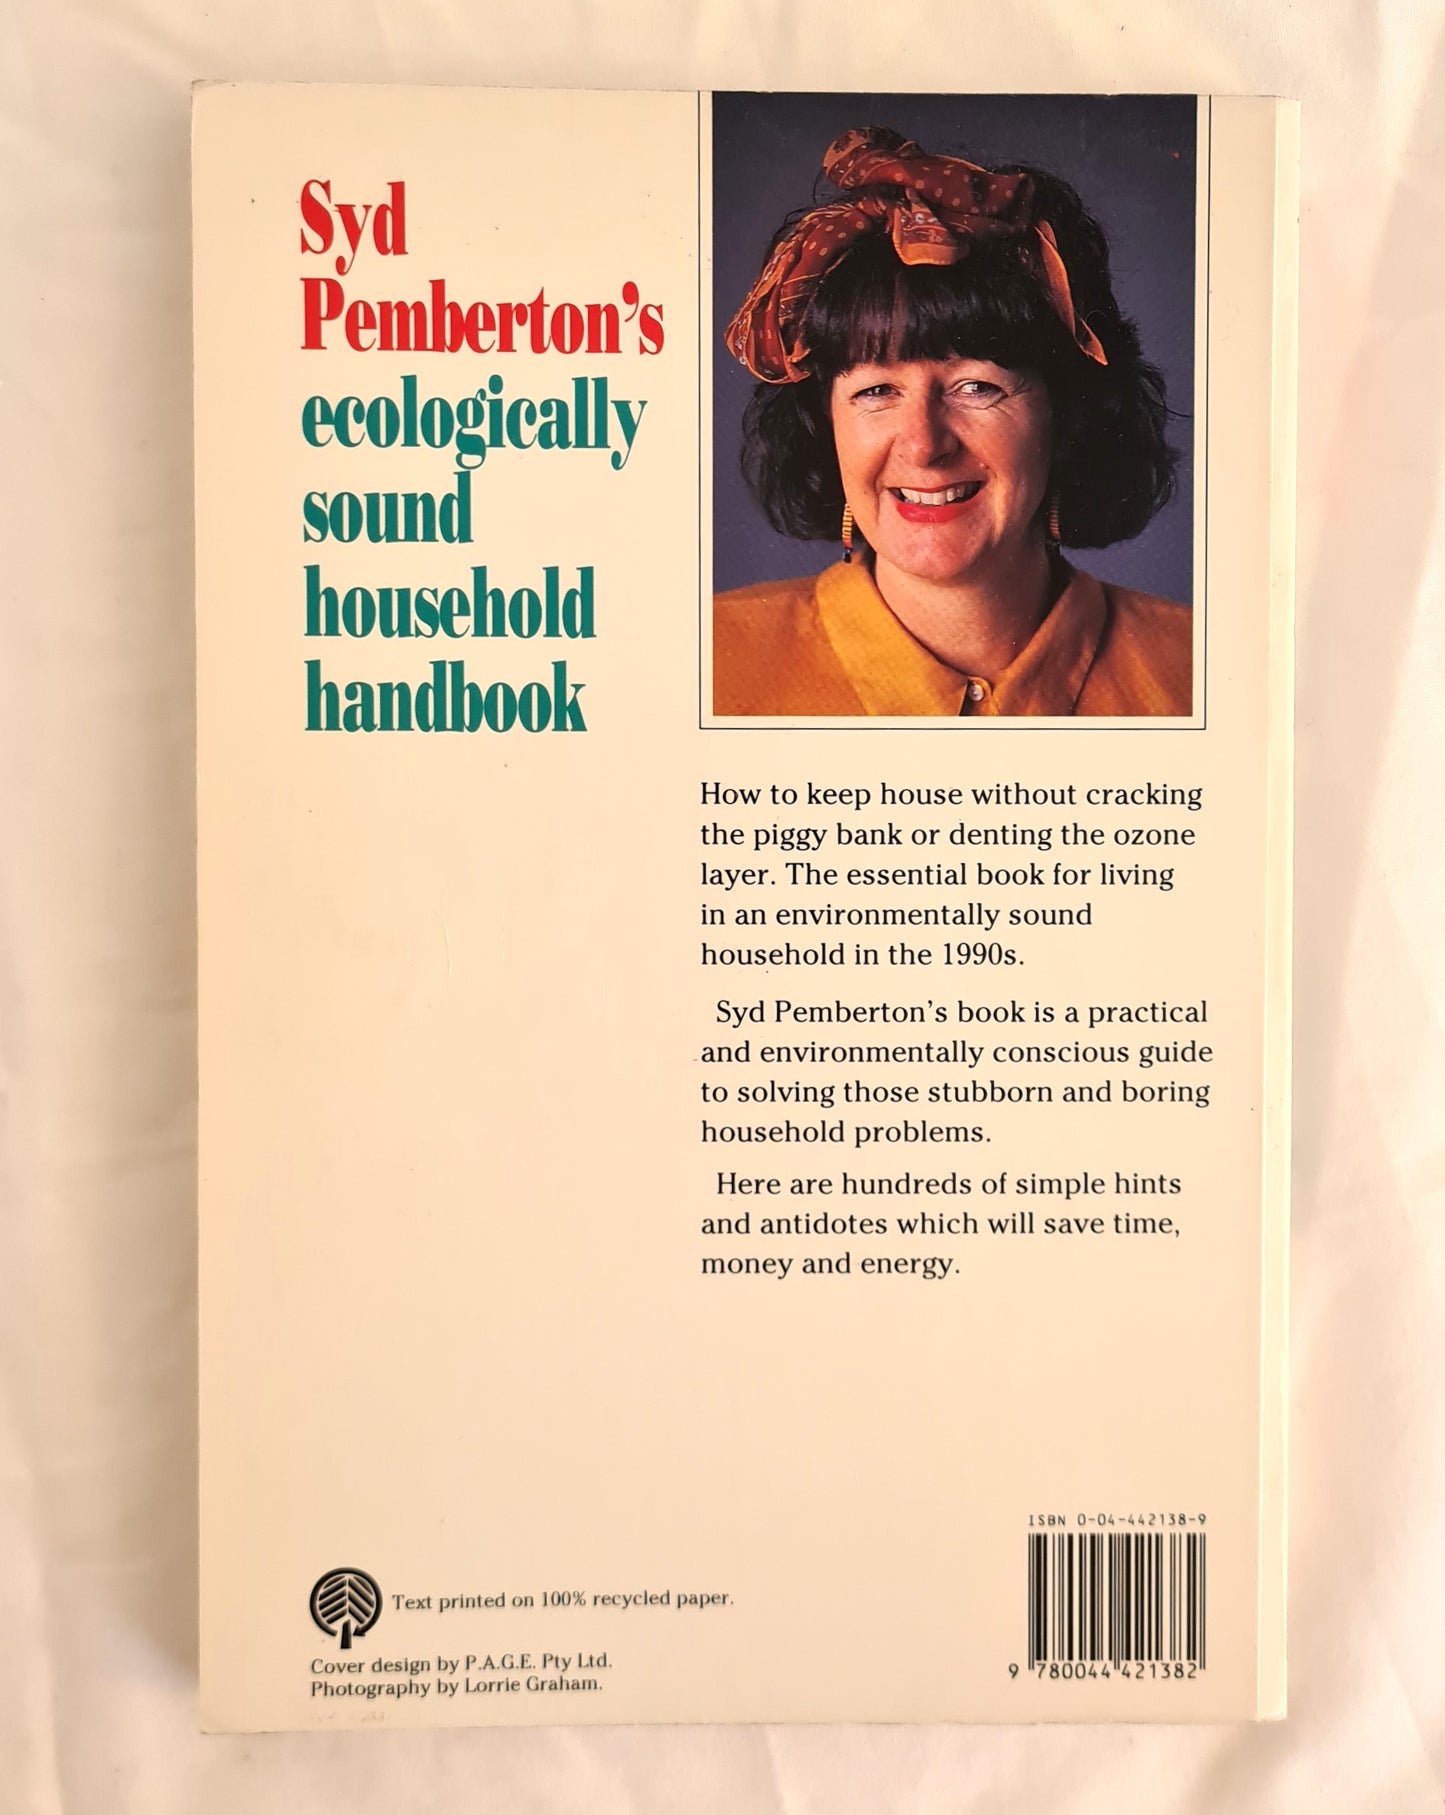 Syd Pemberton’s Ecologically Sound Household Handbook by Syd Pemberton